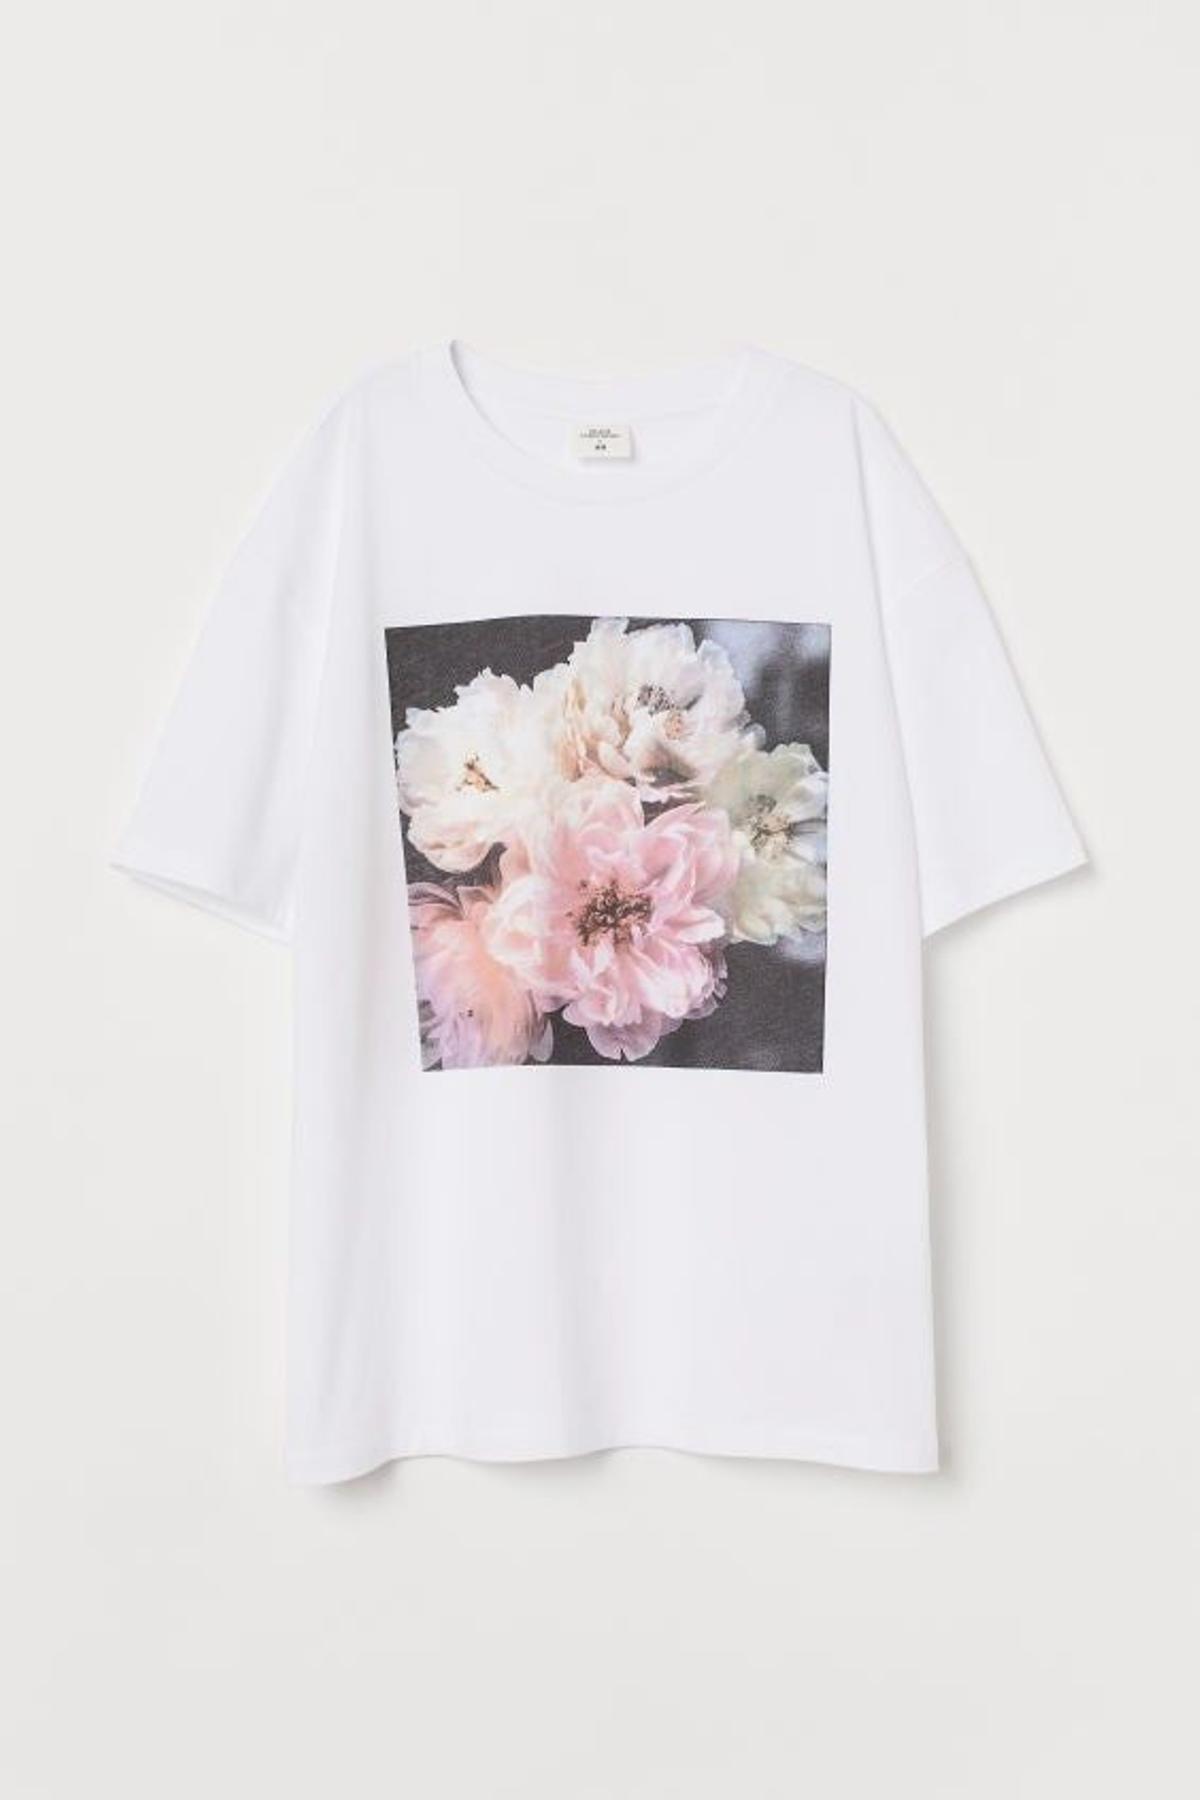 Camiseta de algodón (Precio: 14,99 euros)